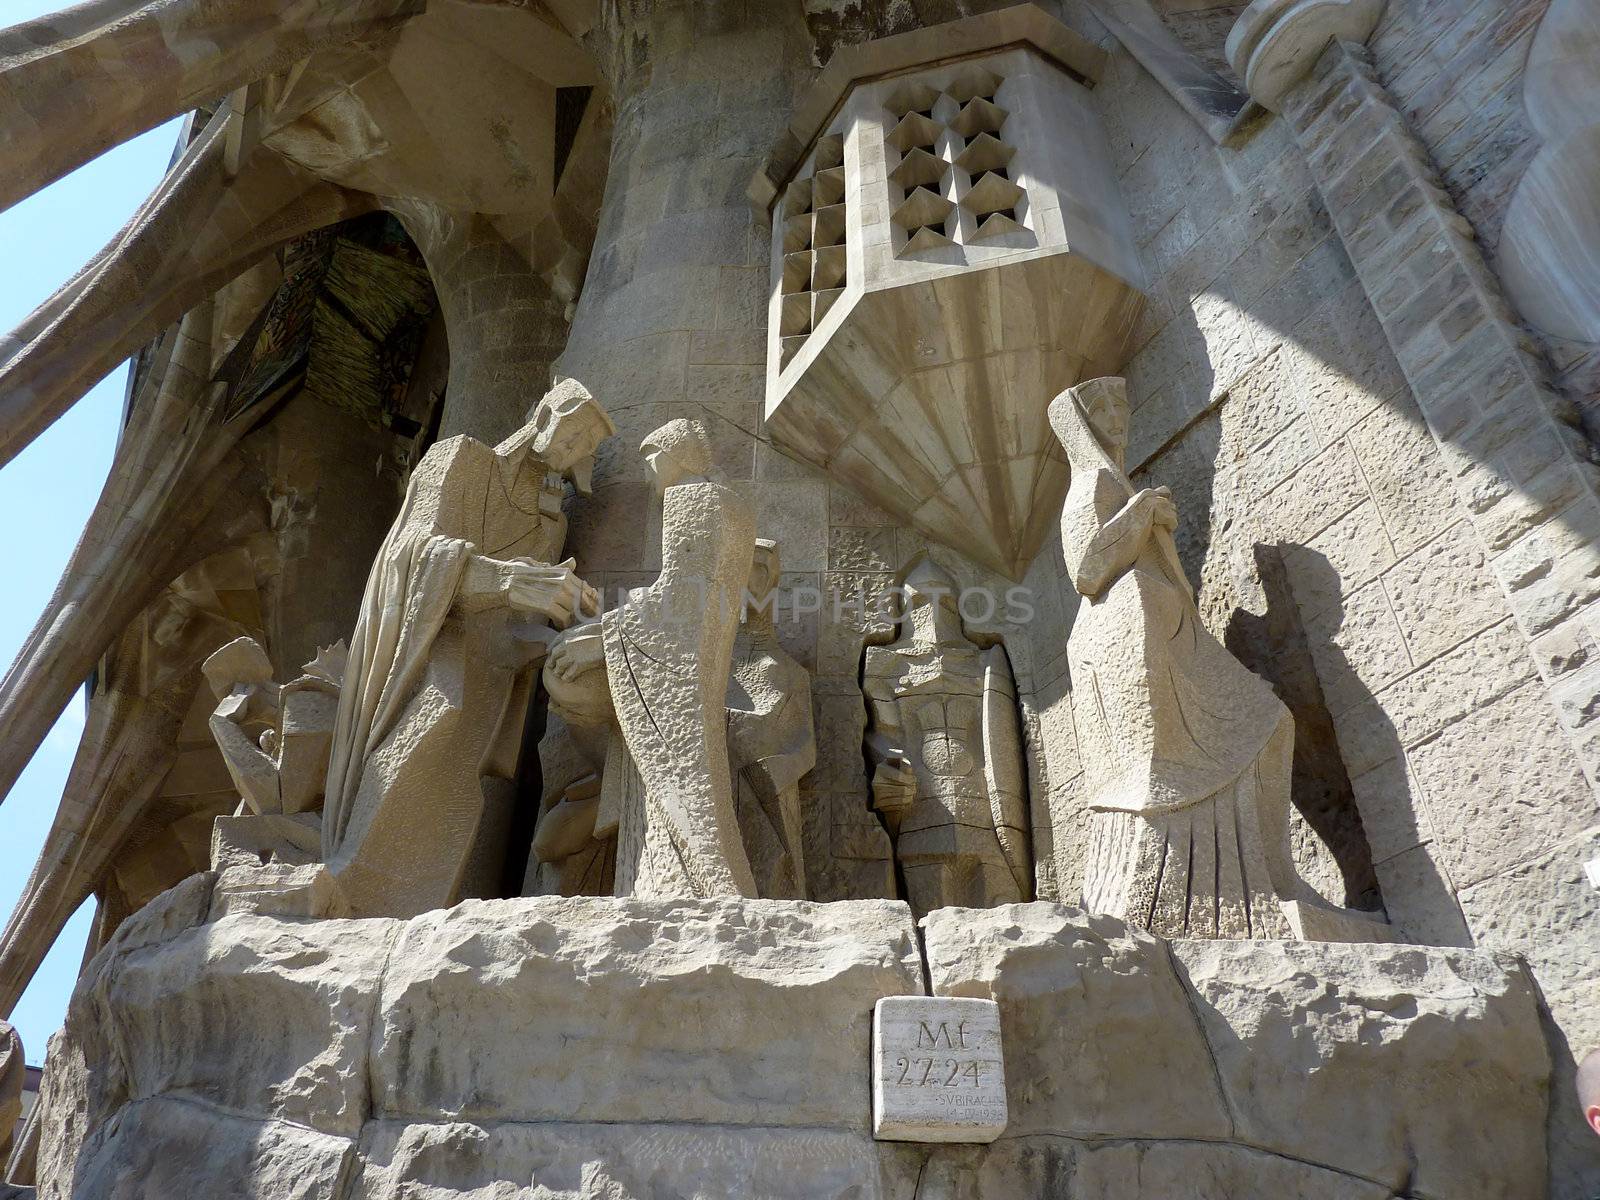 Outside sculptures at the entrance of the Sagrada familia church, Barcelon, Spain